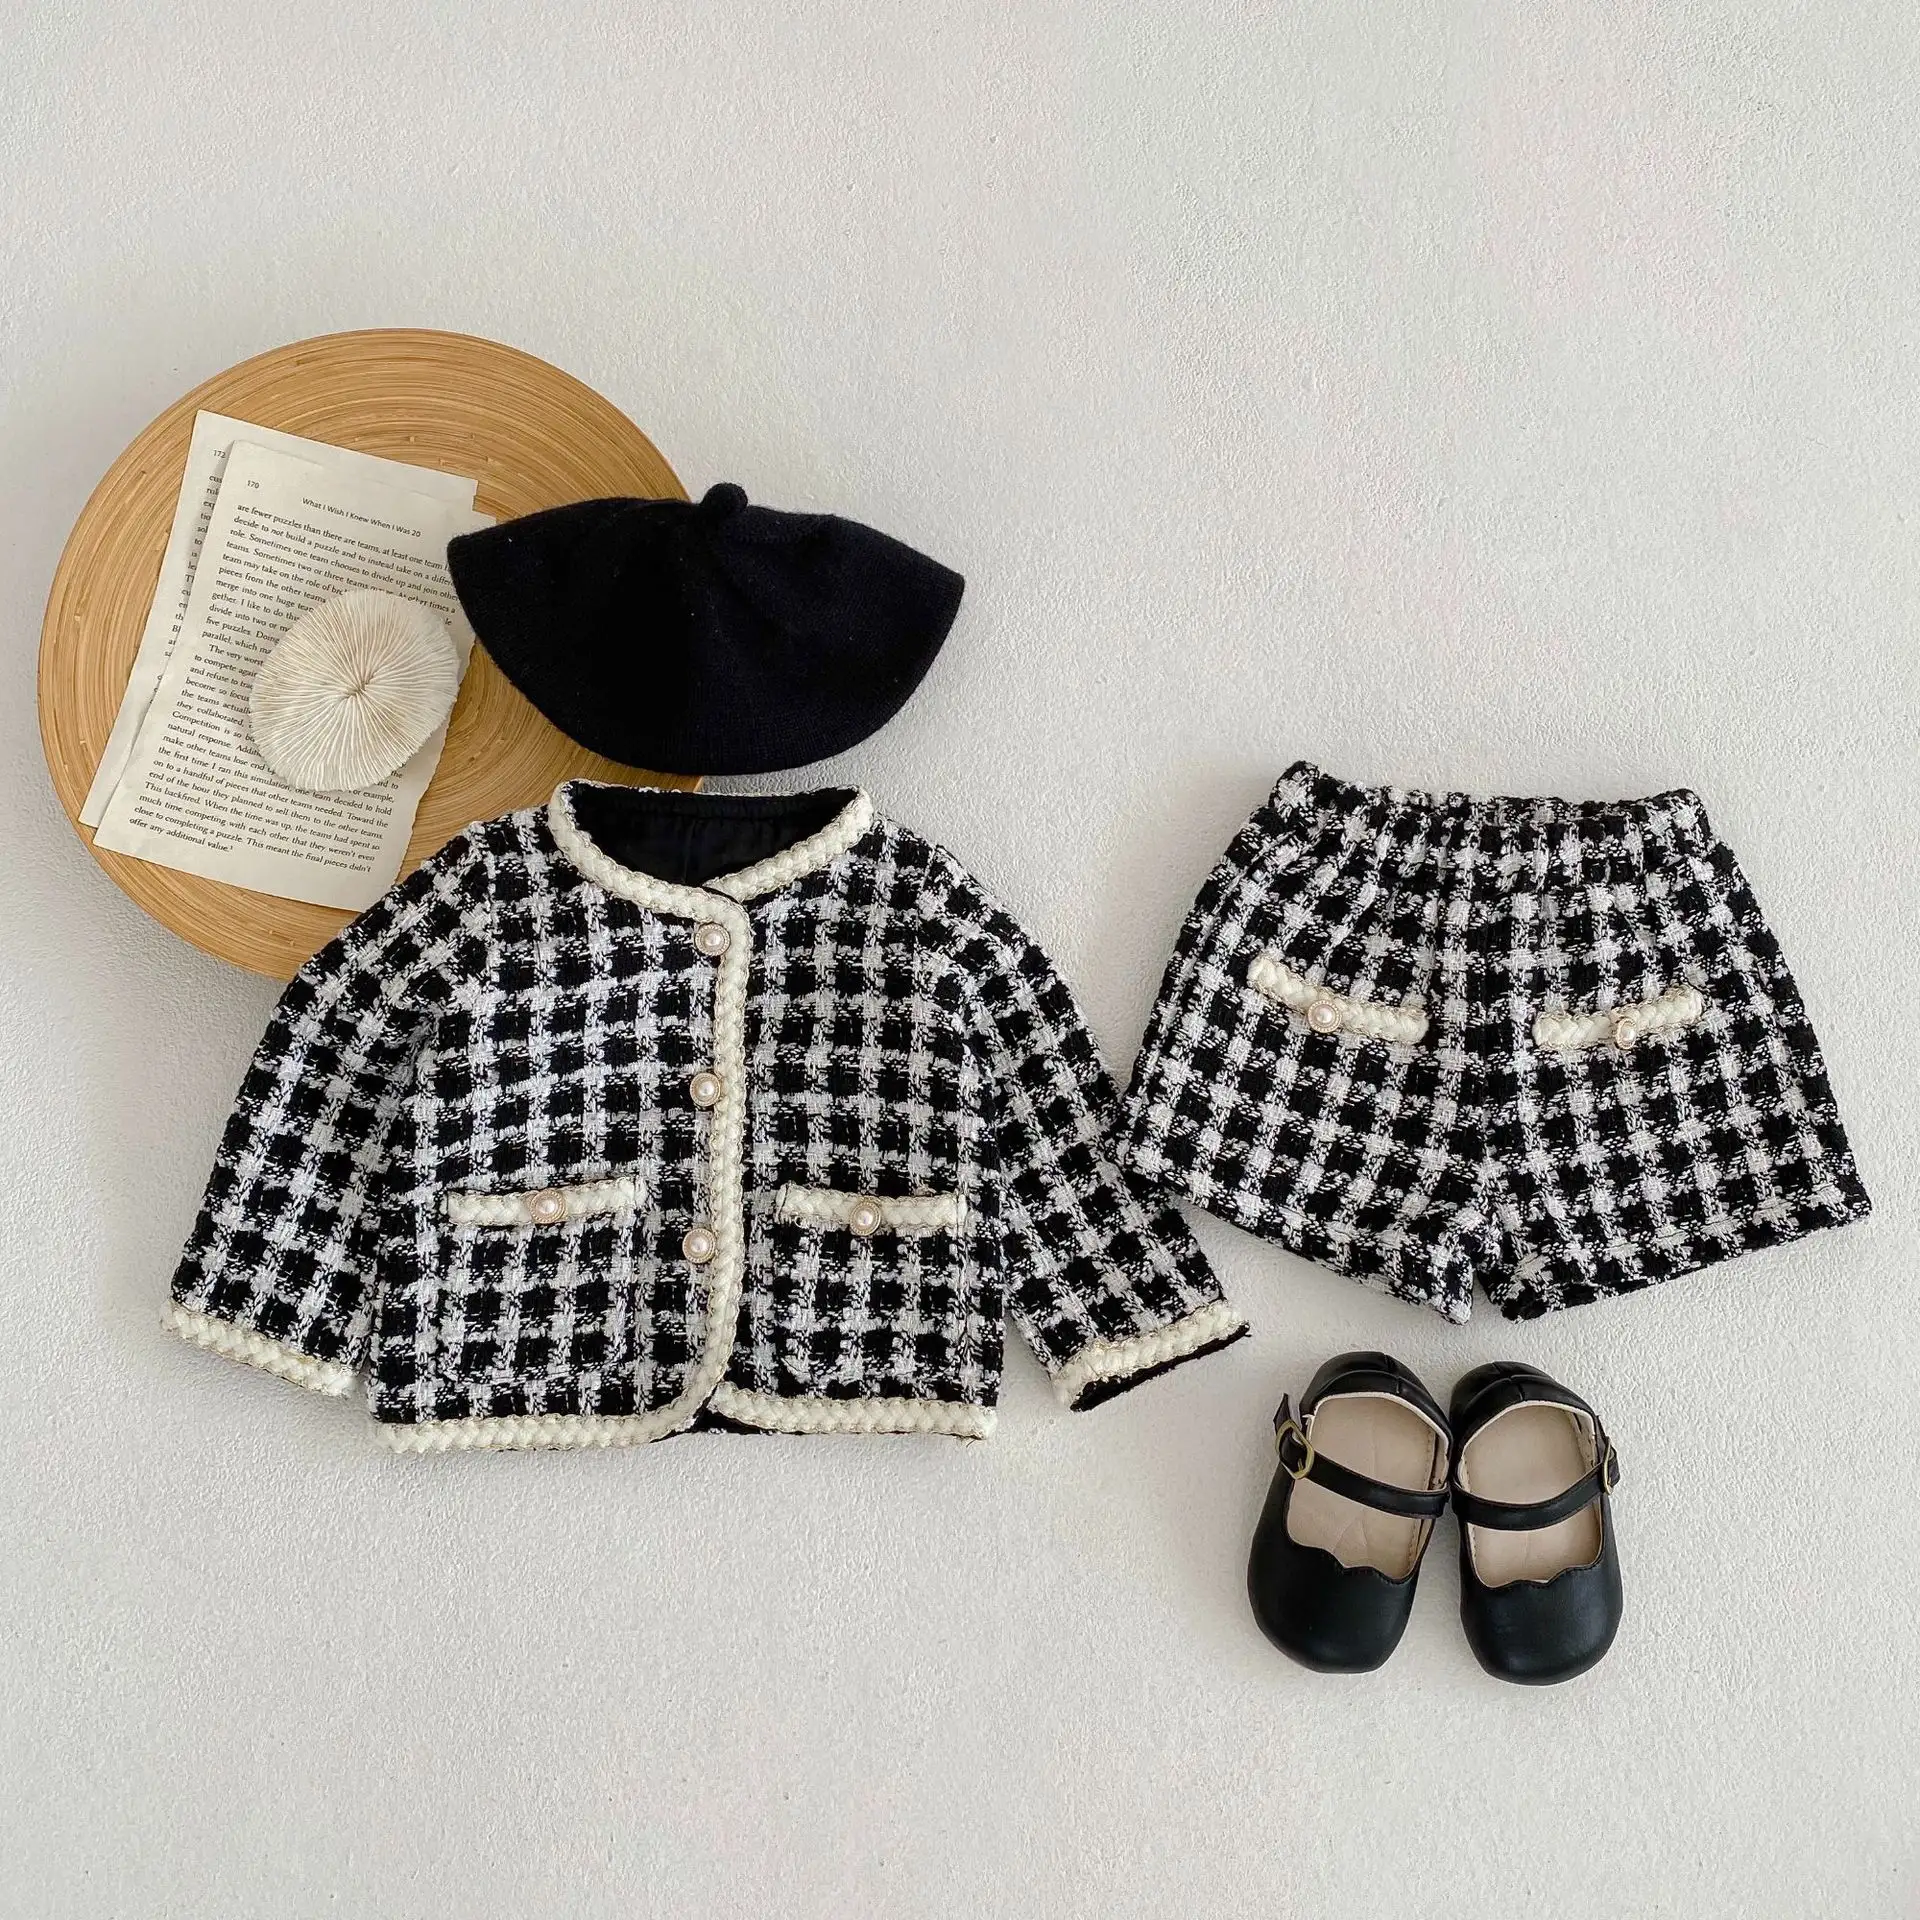 Setelan pakaian bayi perempuan, baju mantel lengan panjang kotak-kotak + celana musim semi 2 potong modis